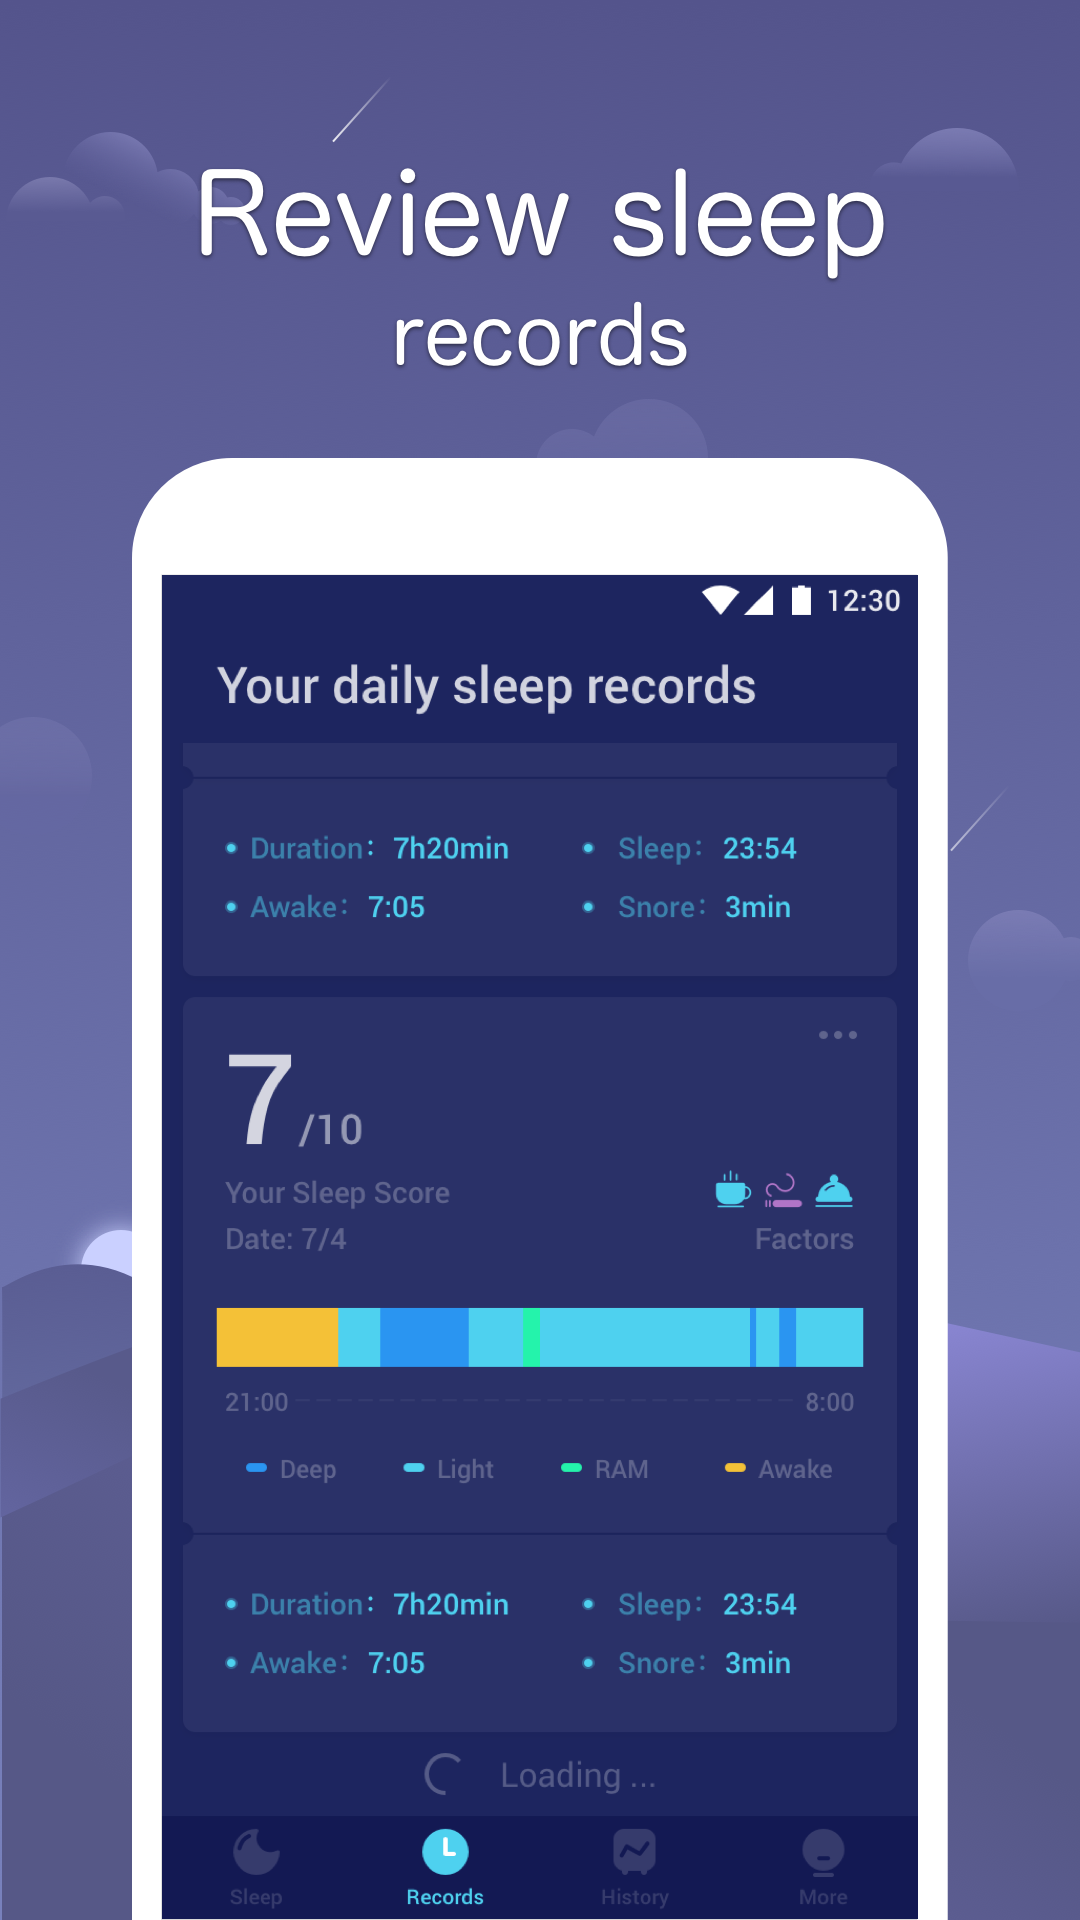 Sleep Monitor: Sleep Cycle Track, Analysis, Music